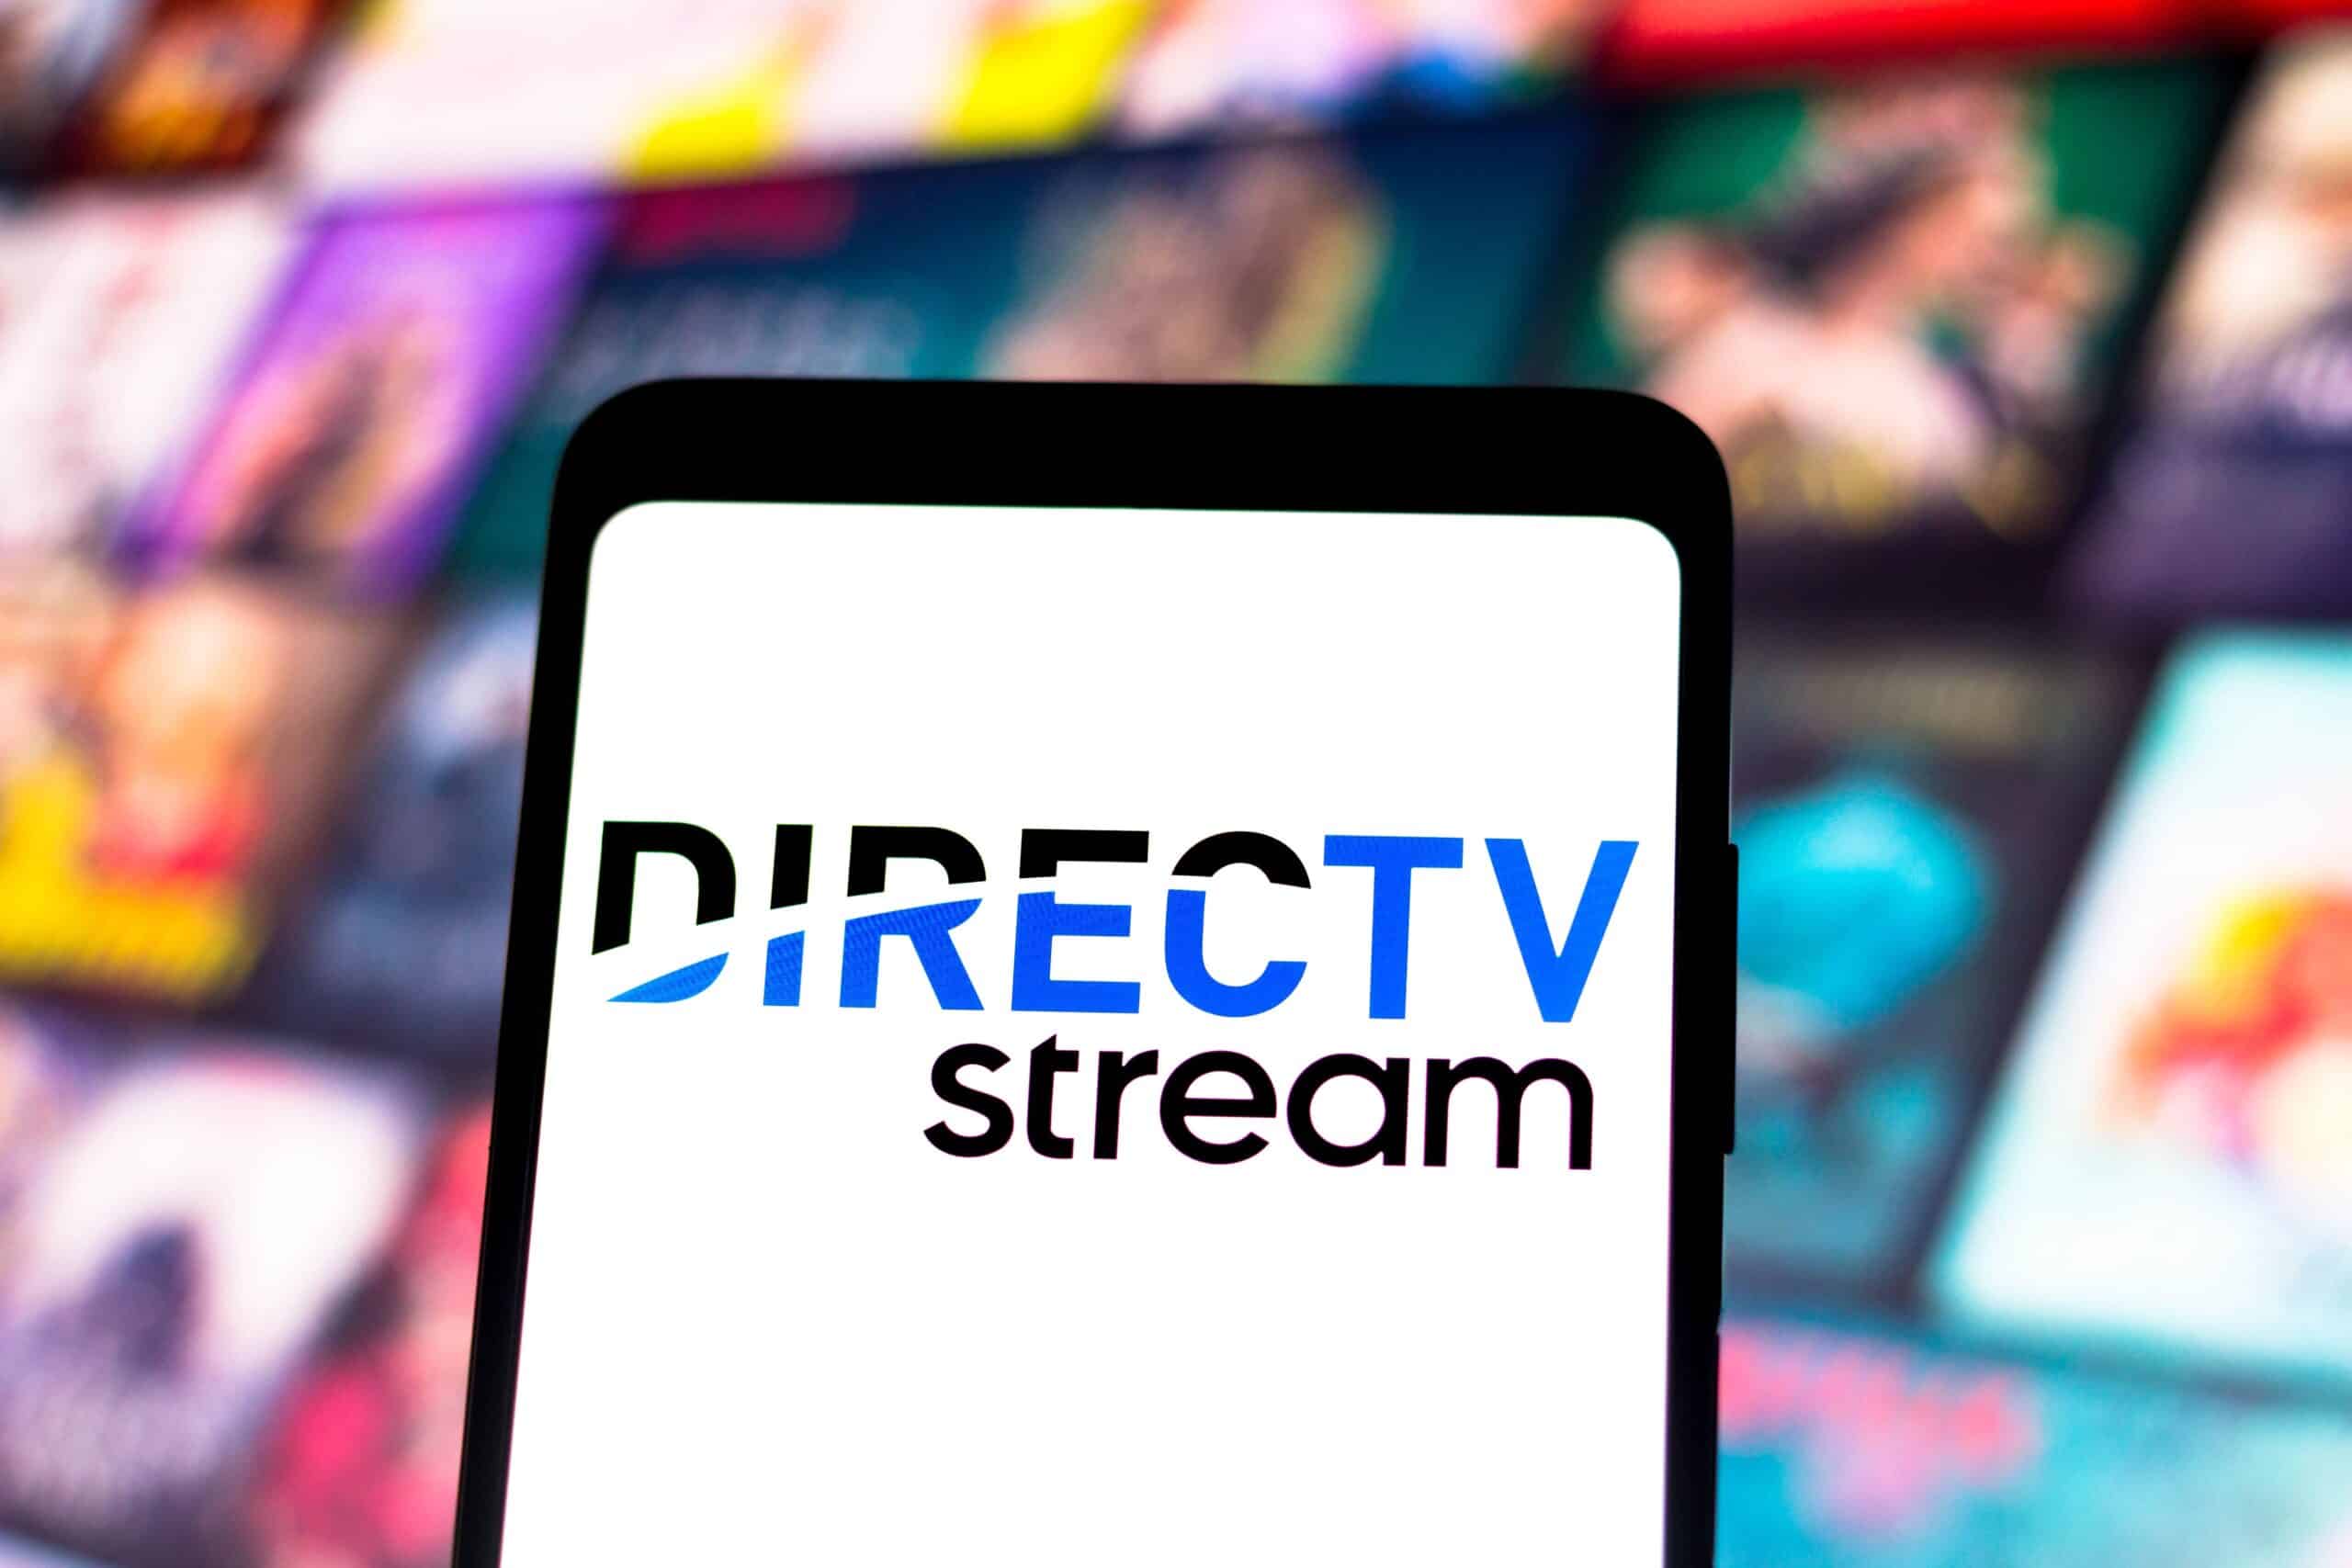 DirecTV stream